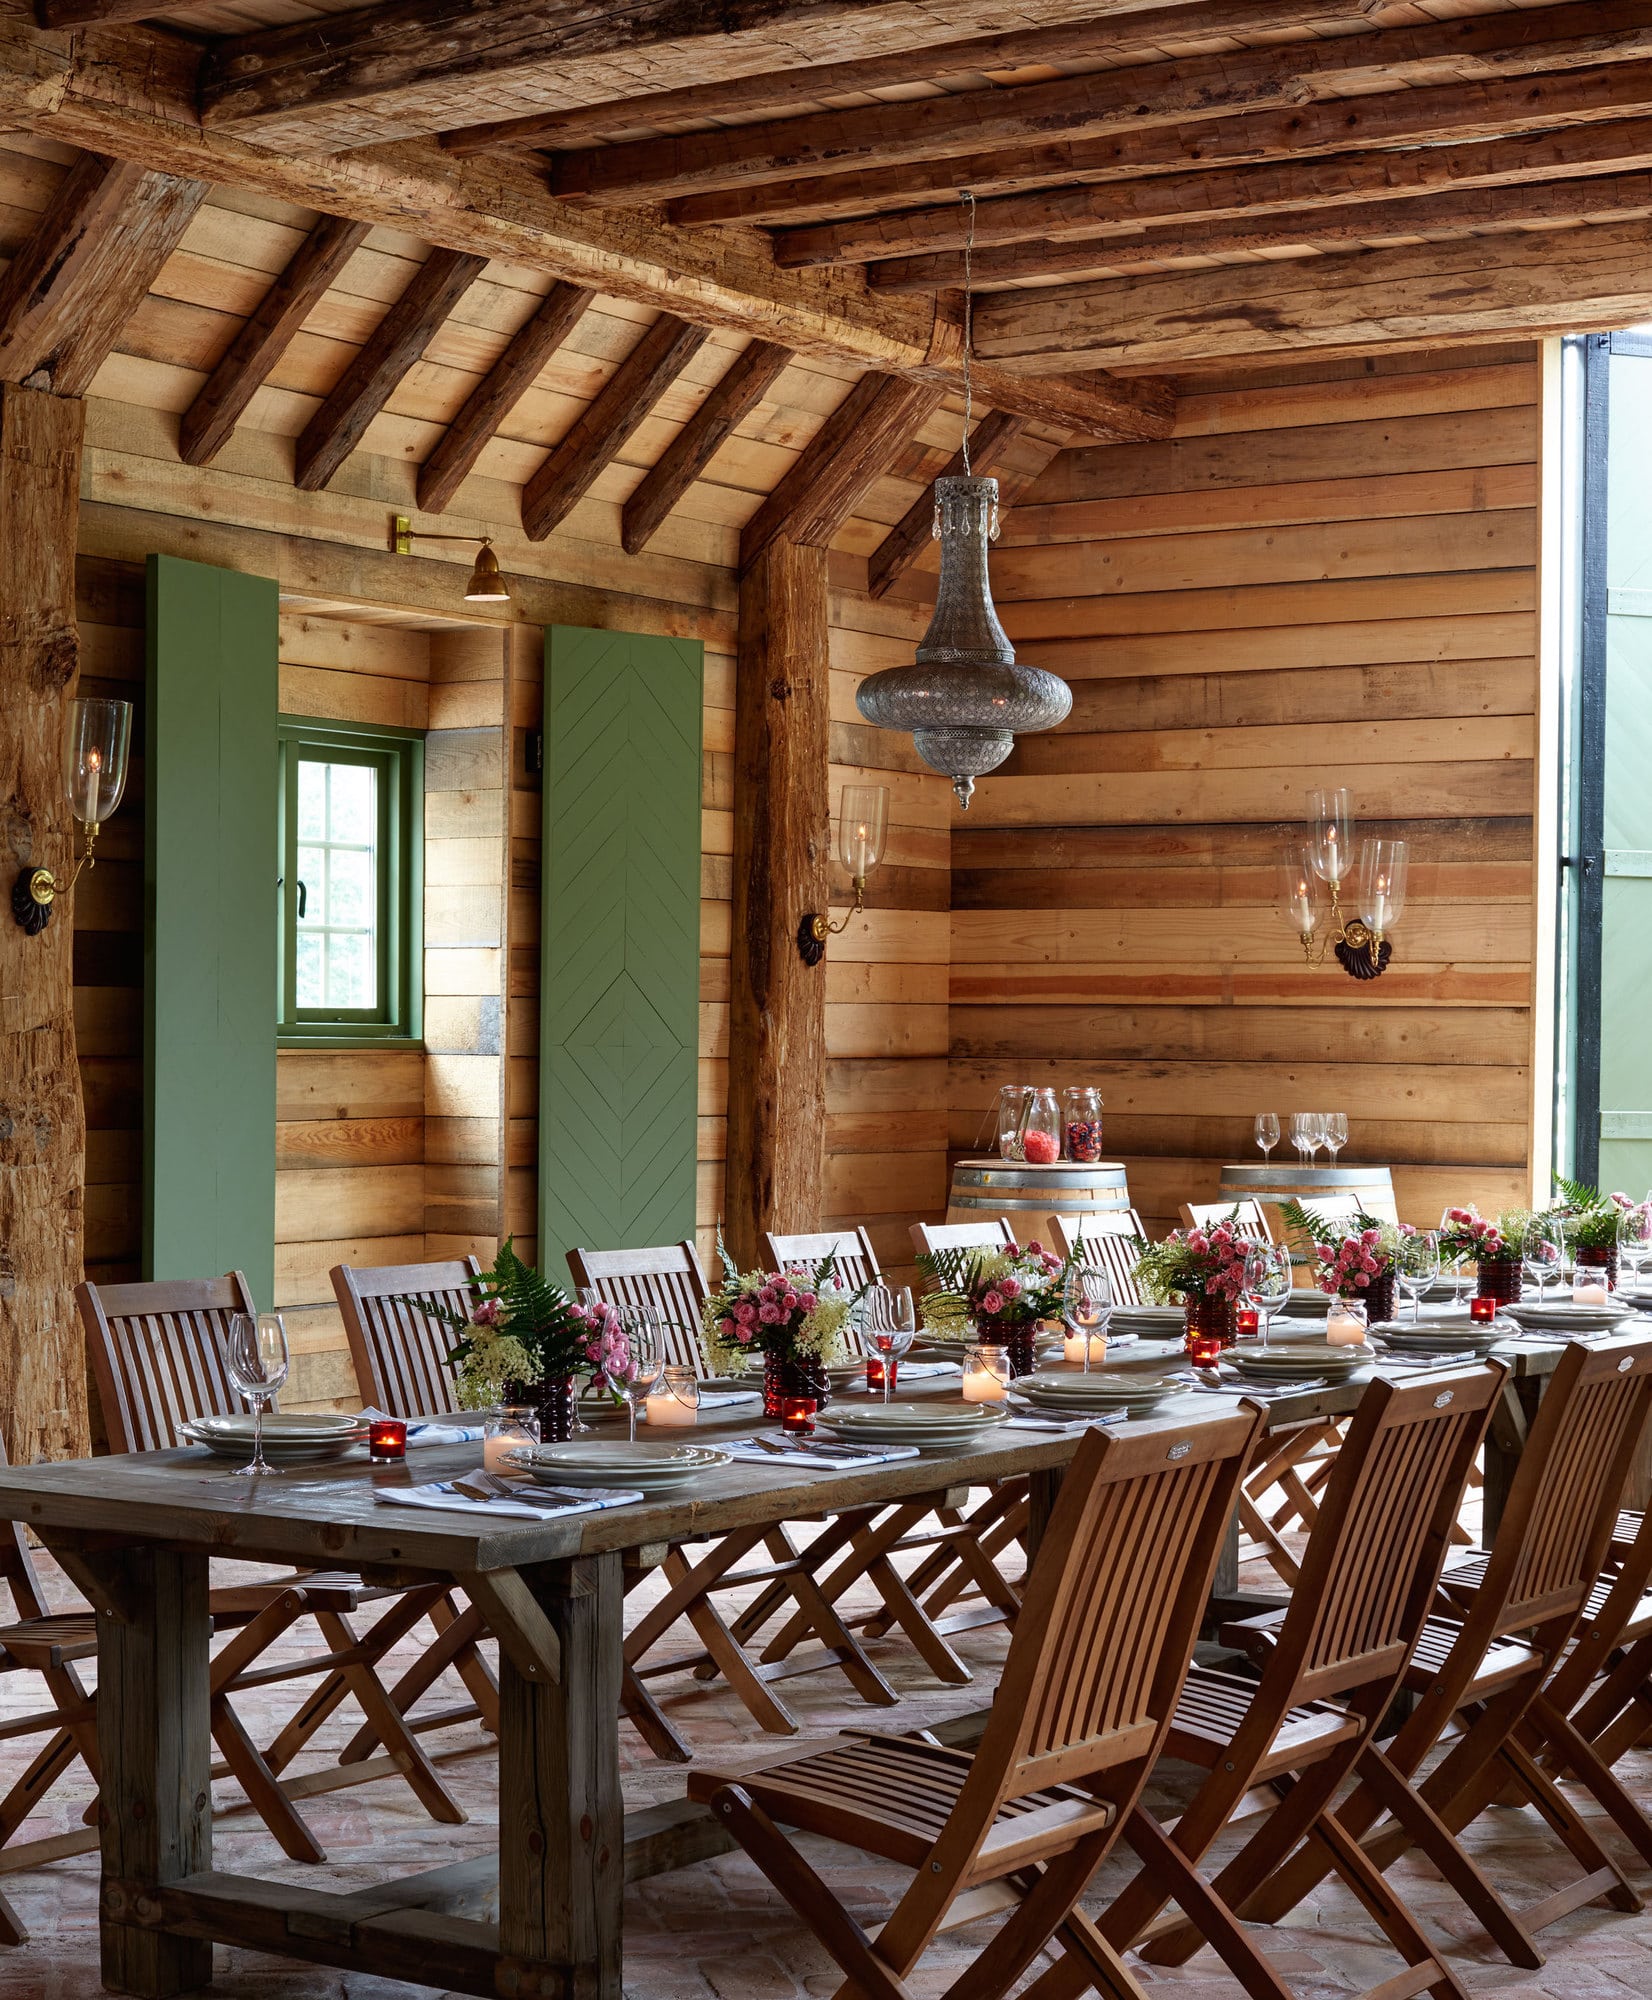 Marshall Watson Interior Design - Luke White Photography - house in Sweden dining room